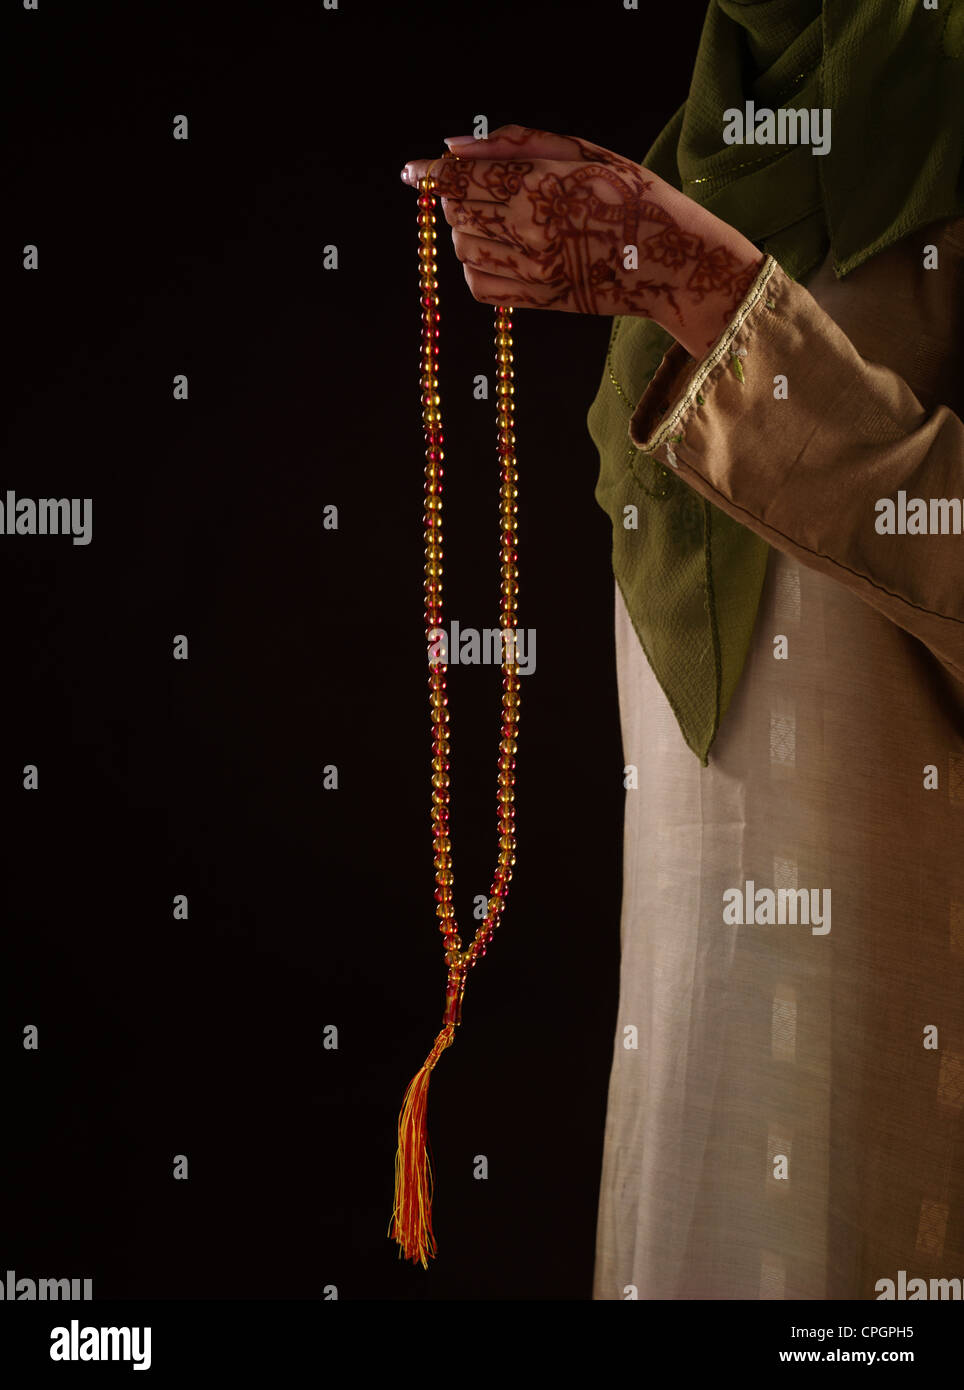 Human hand holding prayer beads, close-up Stock Photo